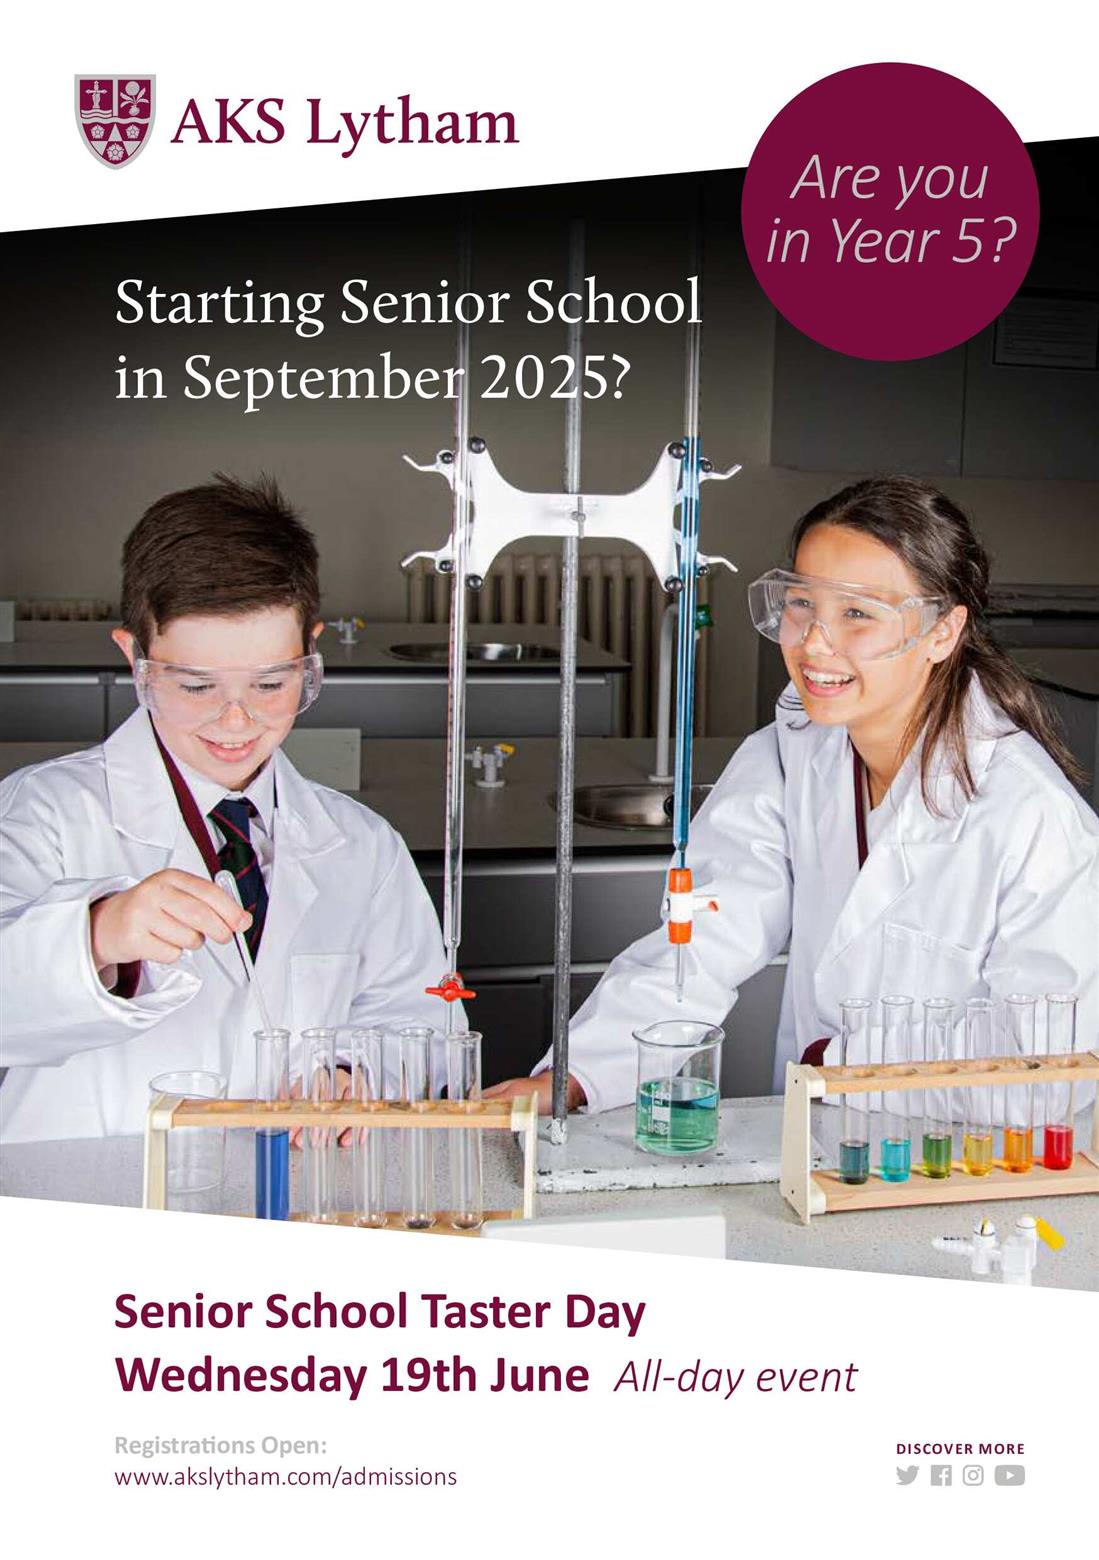 Senior School Taster Day - for Year 5 pupils